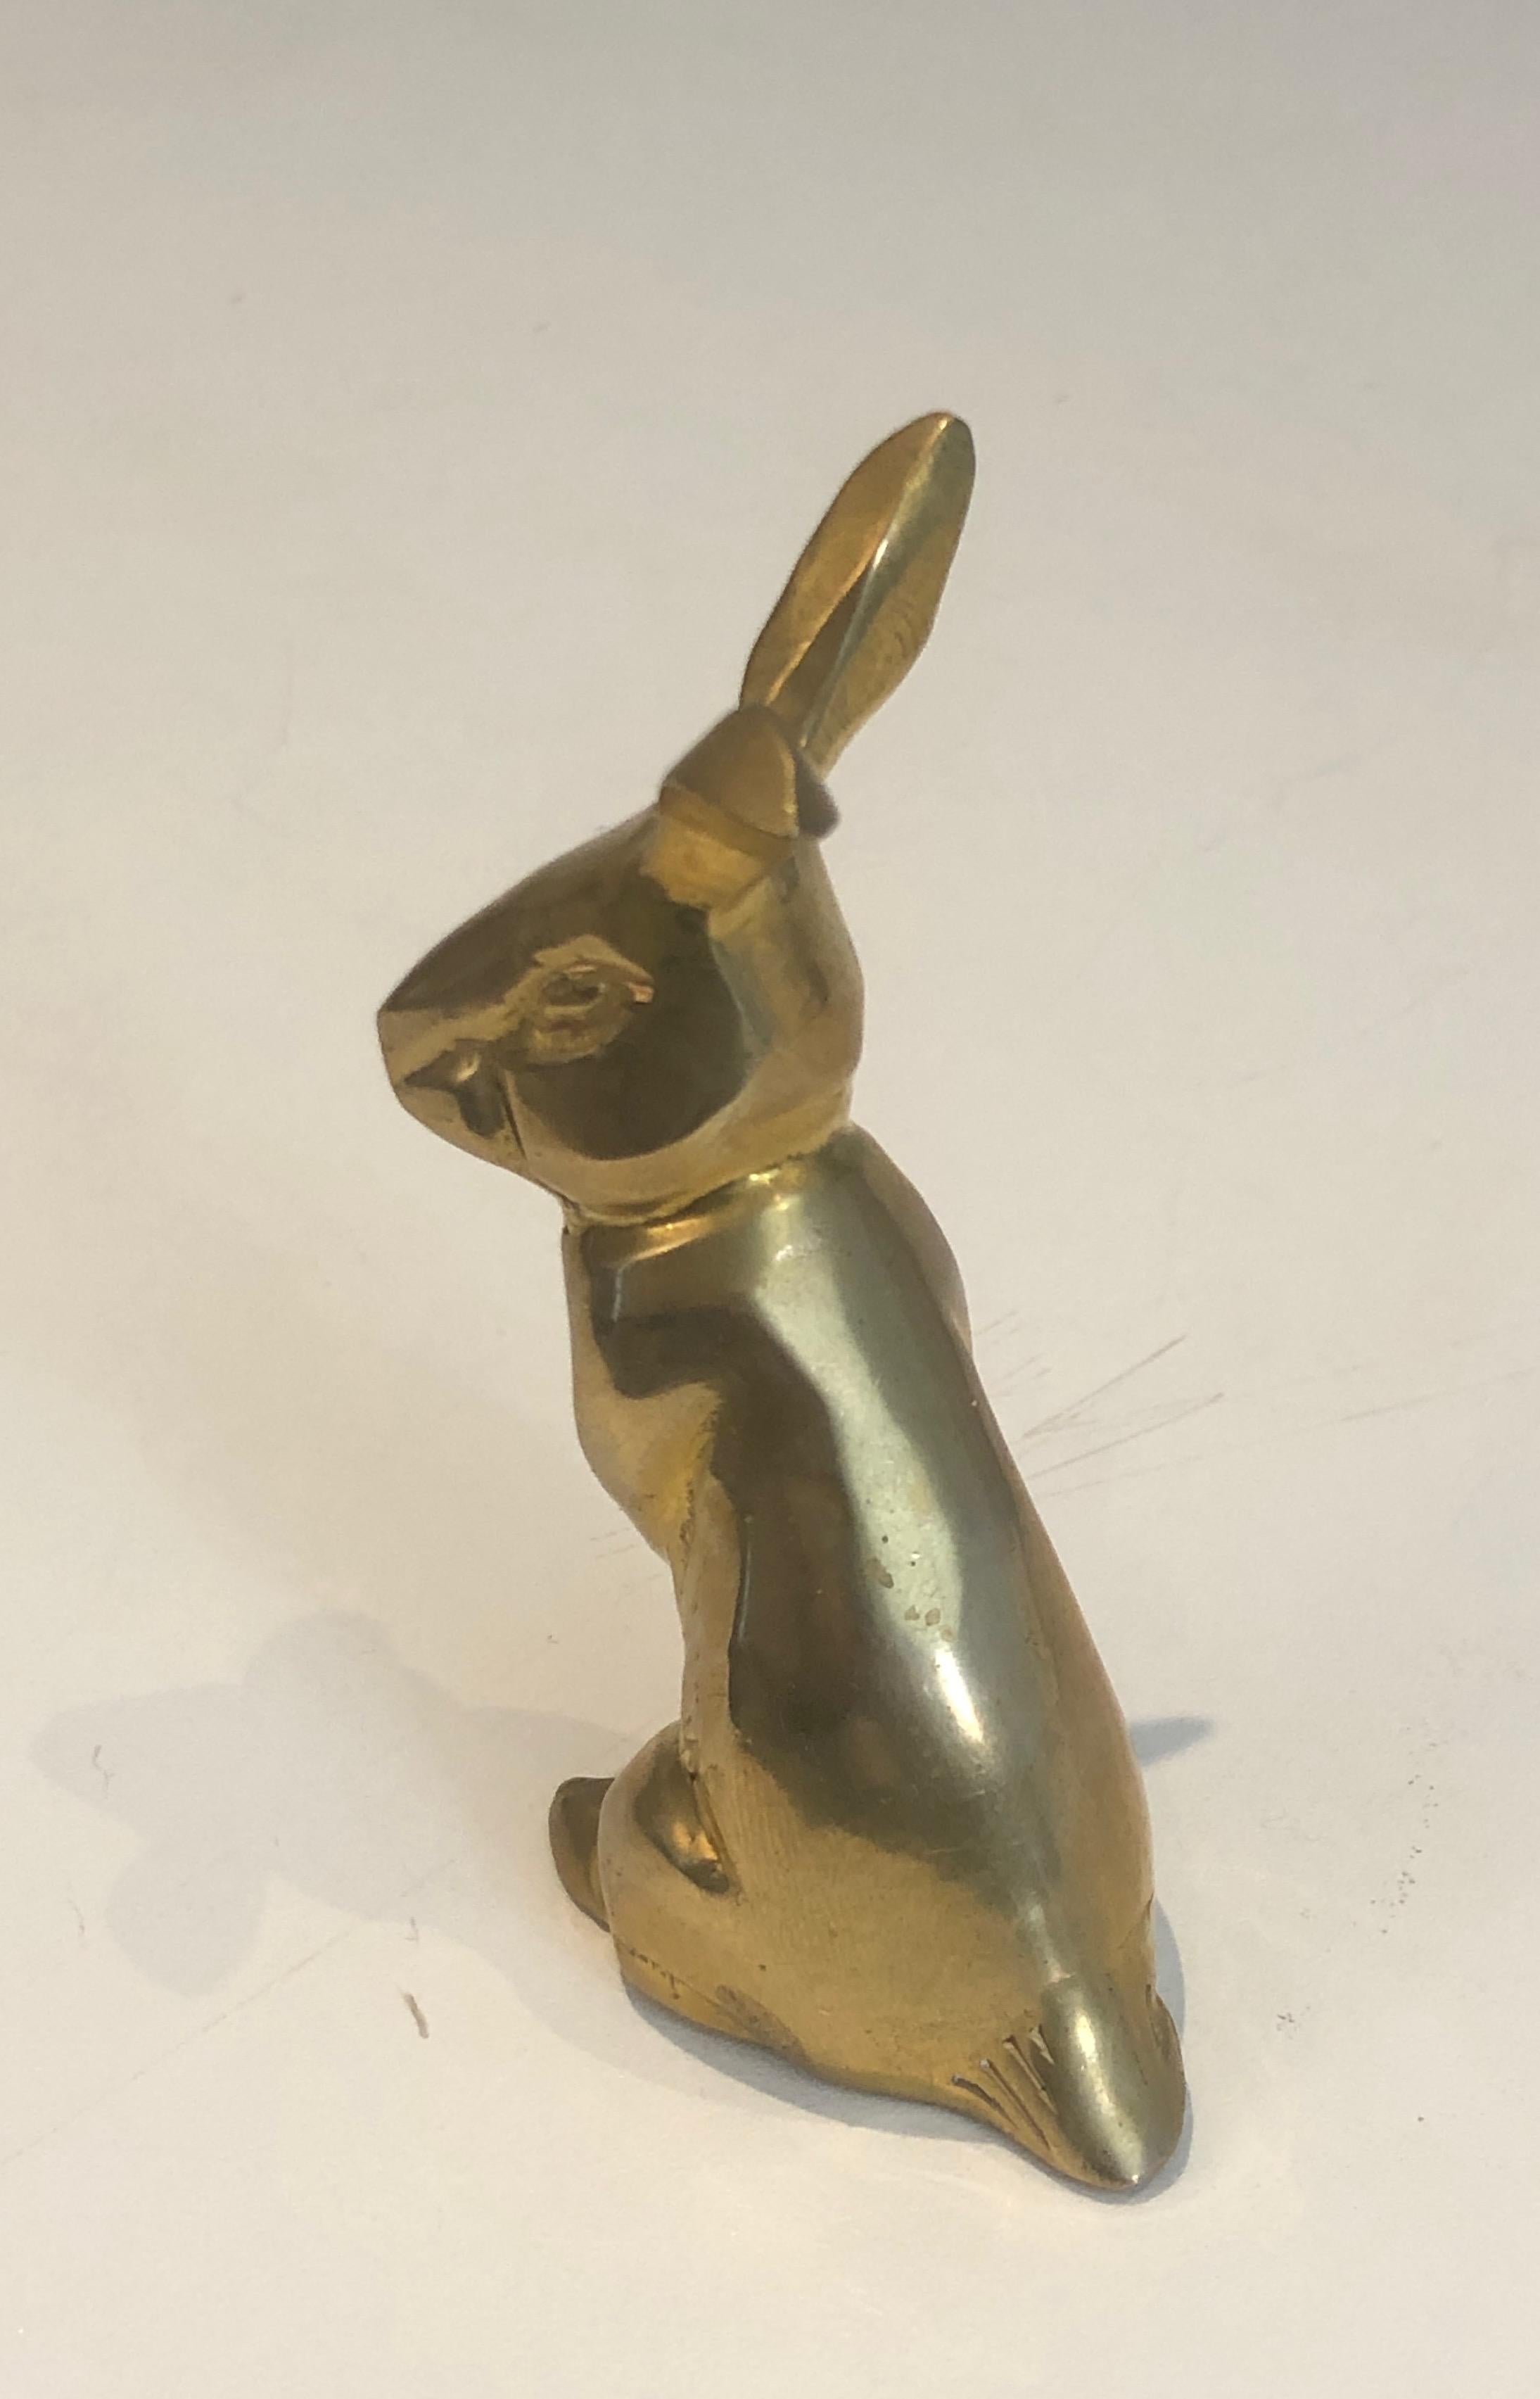 European Small Brass Rabbit Sculpture, French, Circa 1970